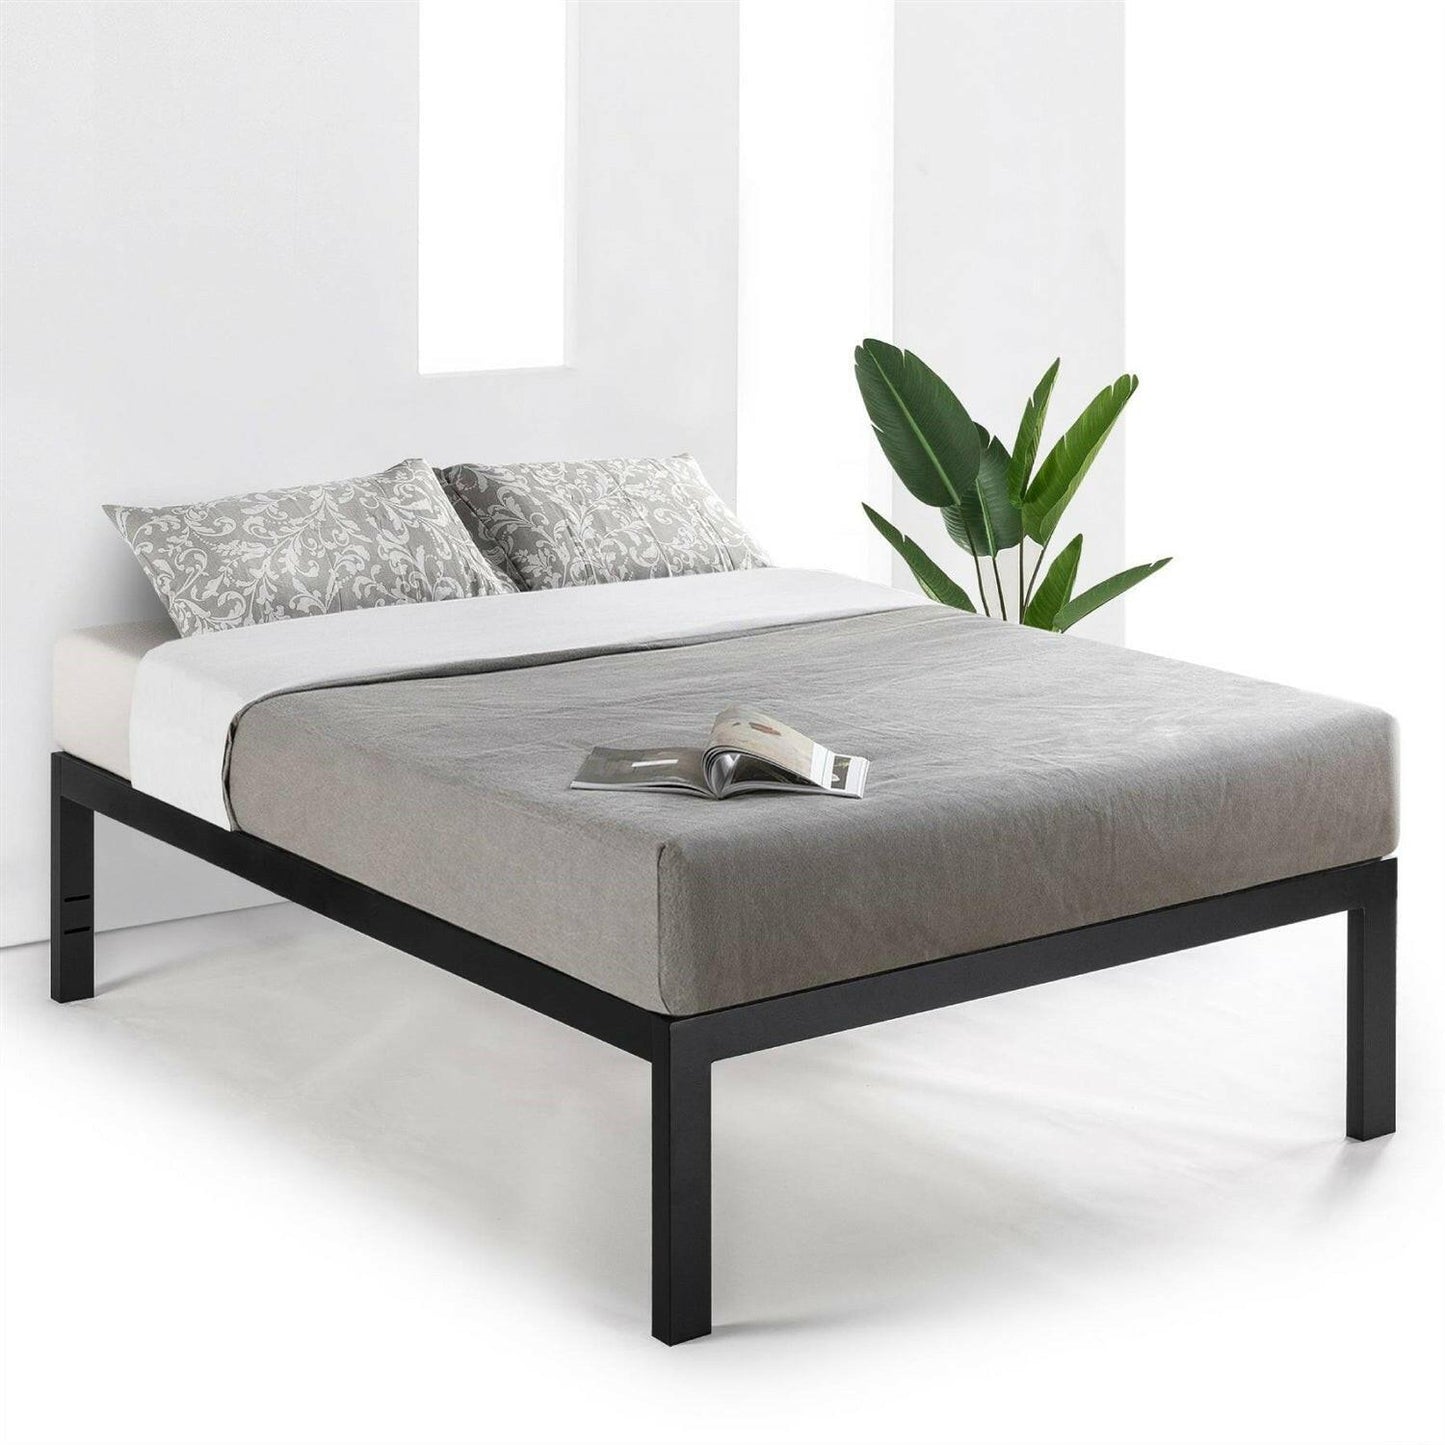 Twin size 18 Inch Easy Assemble Metal Platform Bed Frame Wooden Slats - FurniFindUSA